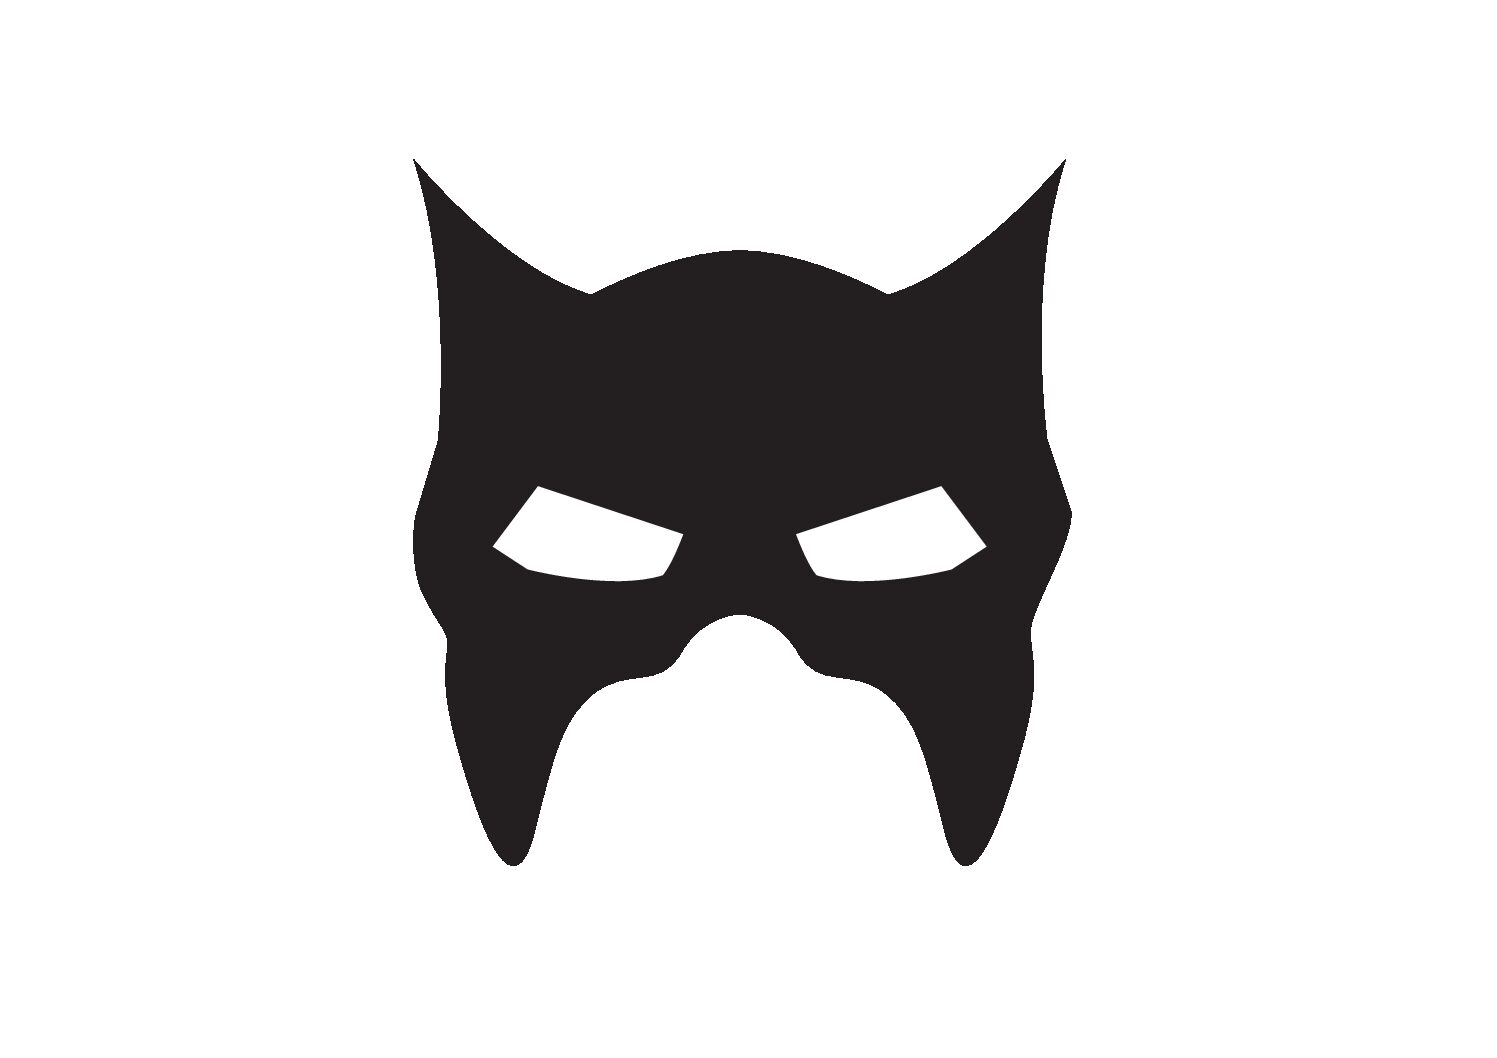 Batman Mask For Kids To Make · The Inspiration Edit